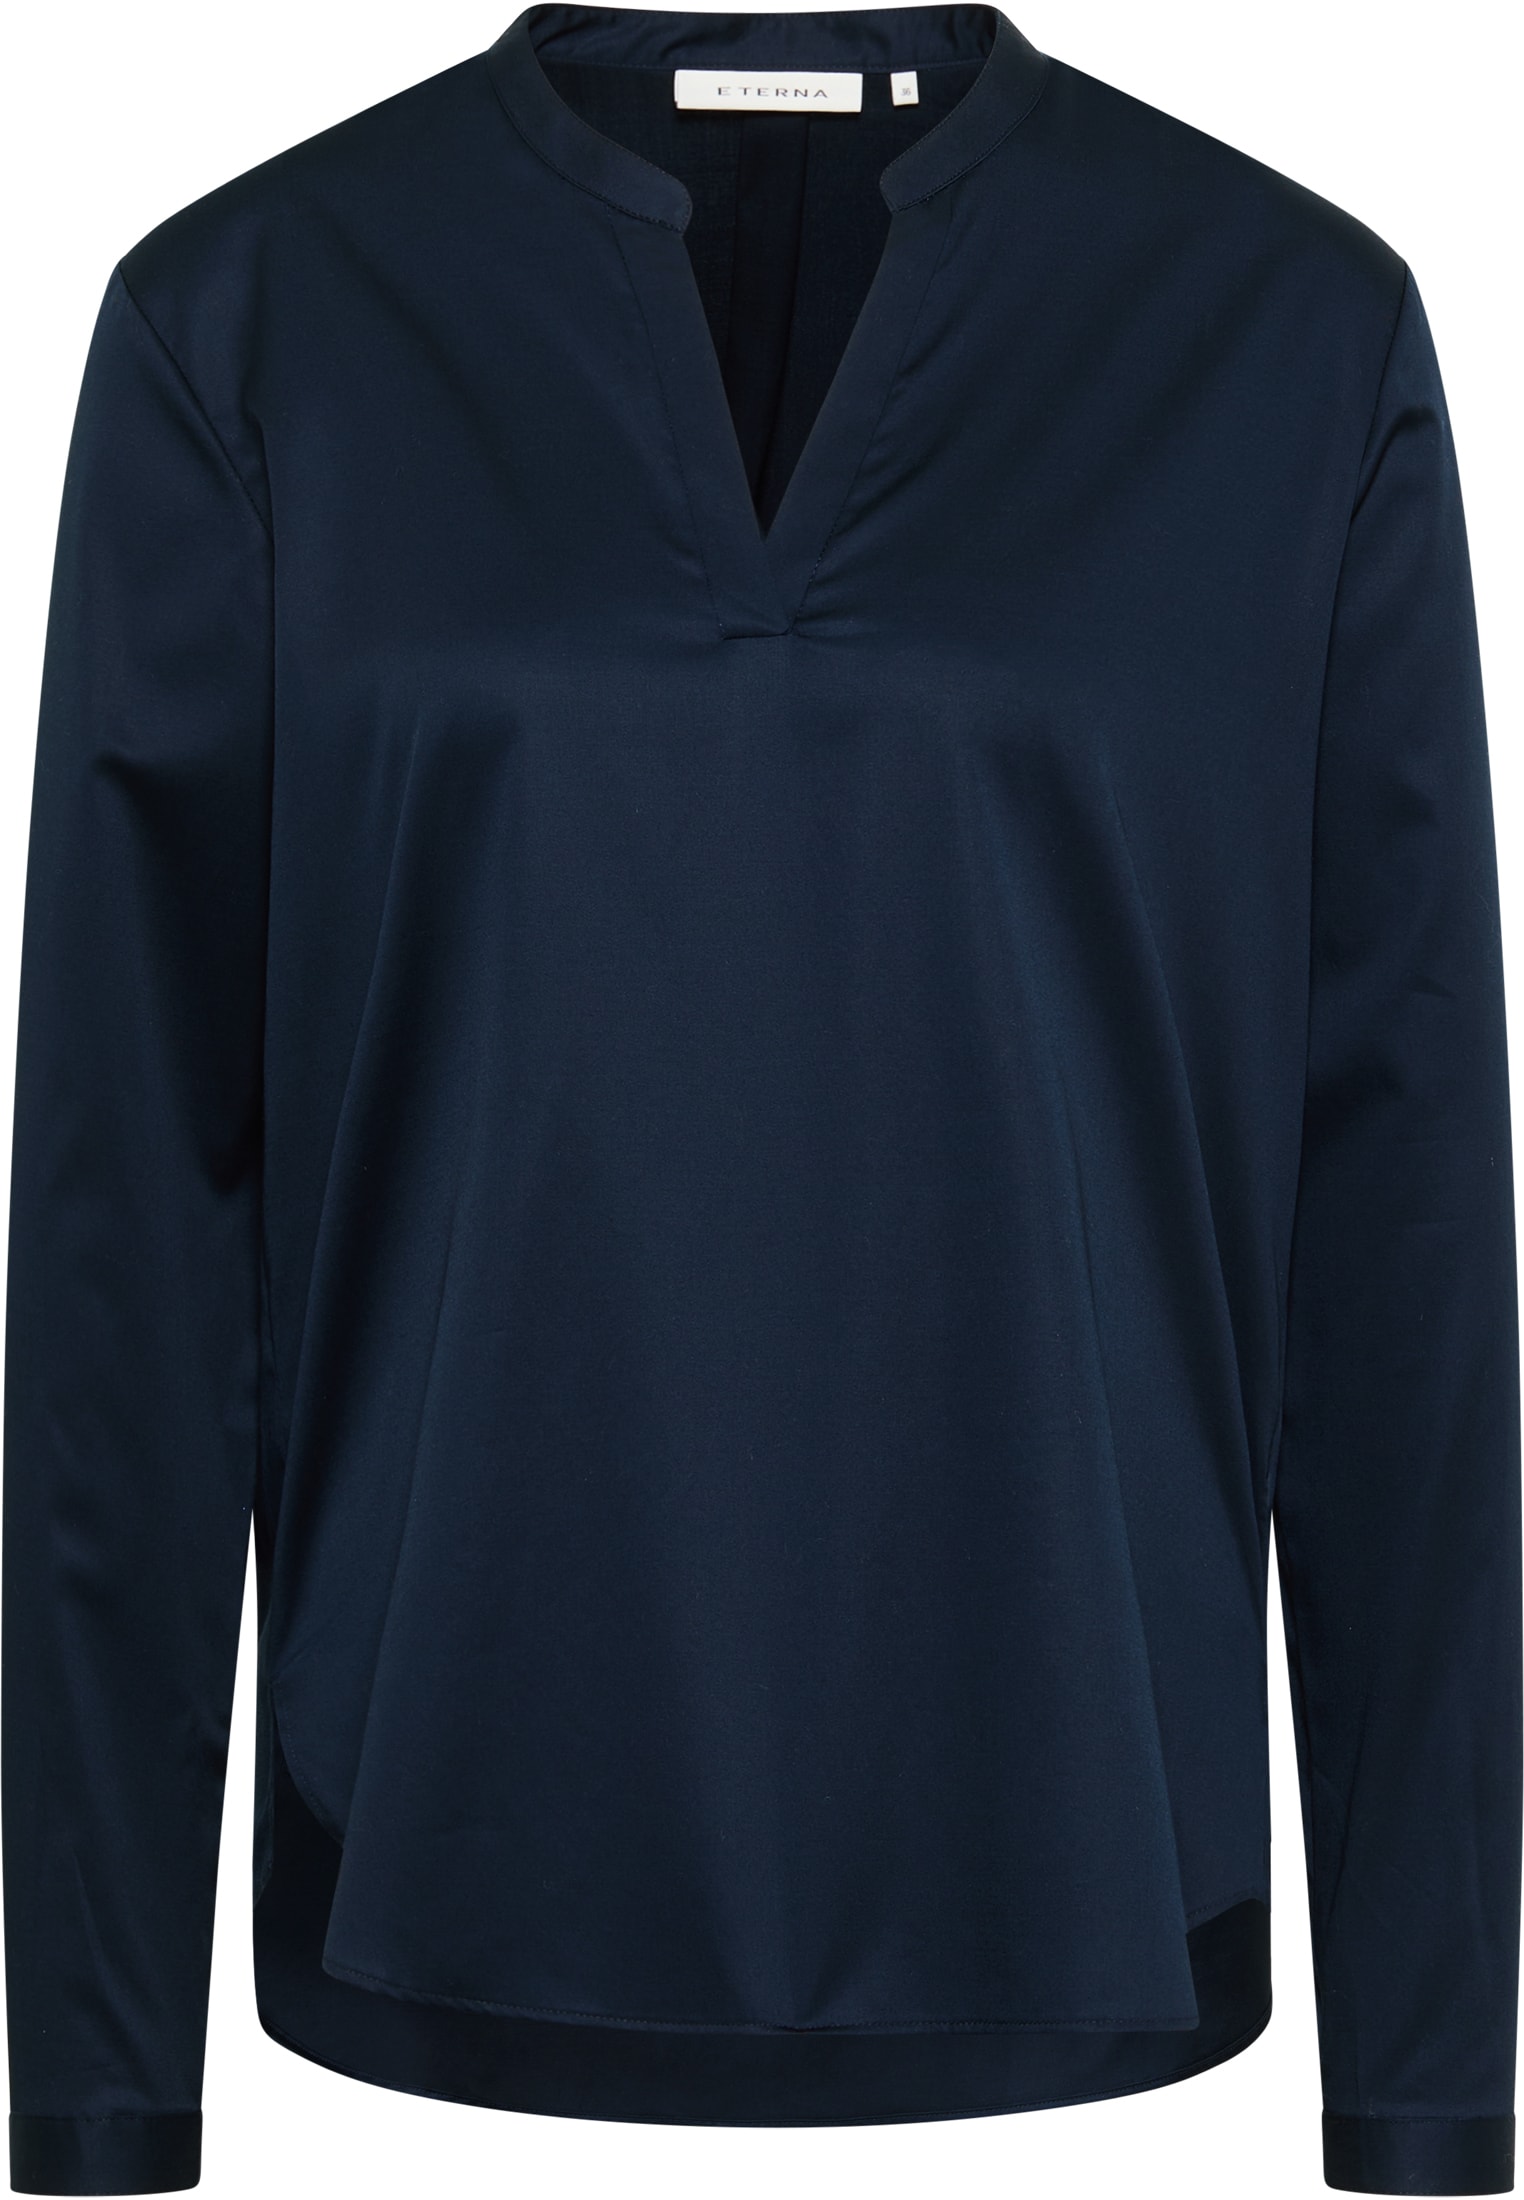 2BL00618-01-81-48-1/1 | dunkelblau unifarben Langarm Bluse | 48 | in dunkelblau Satin Shirt |